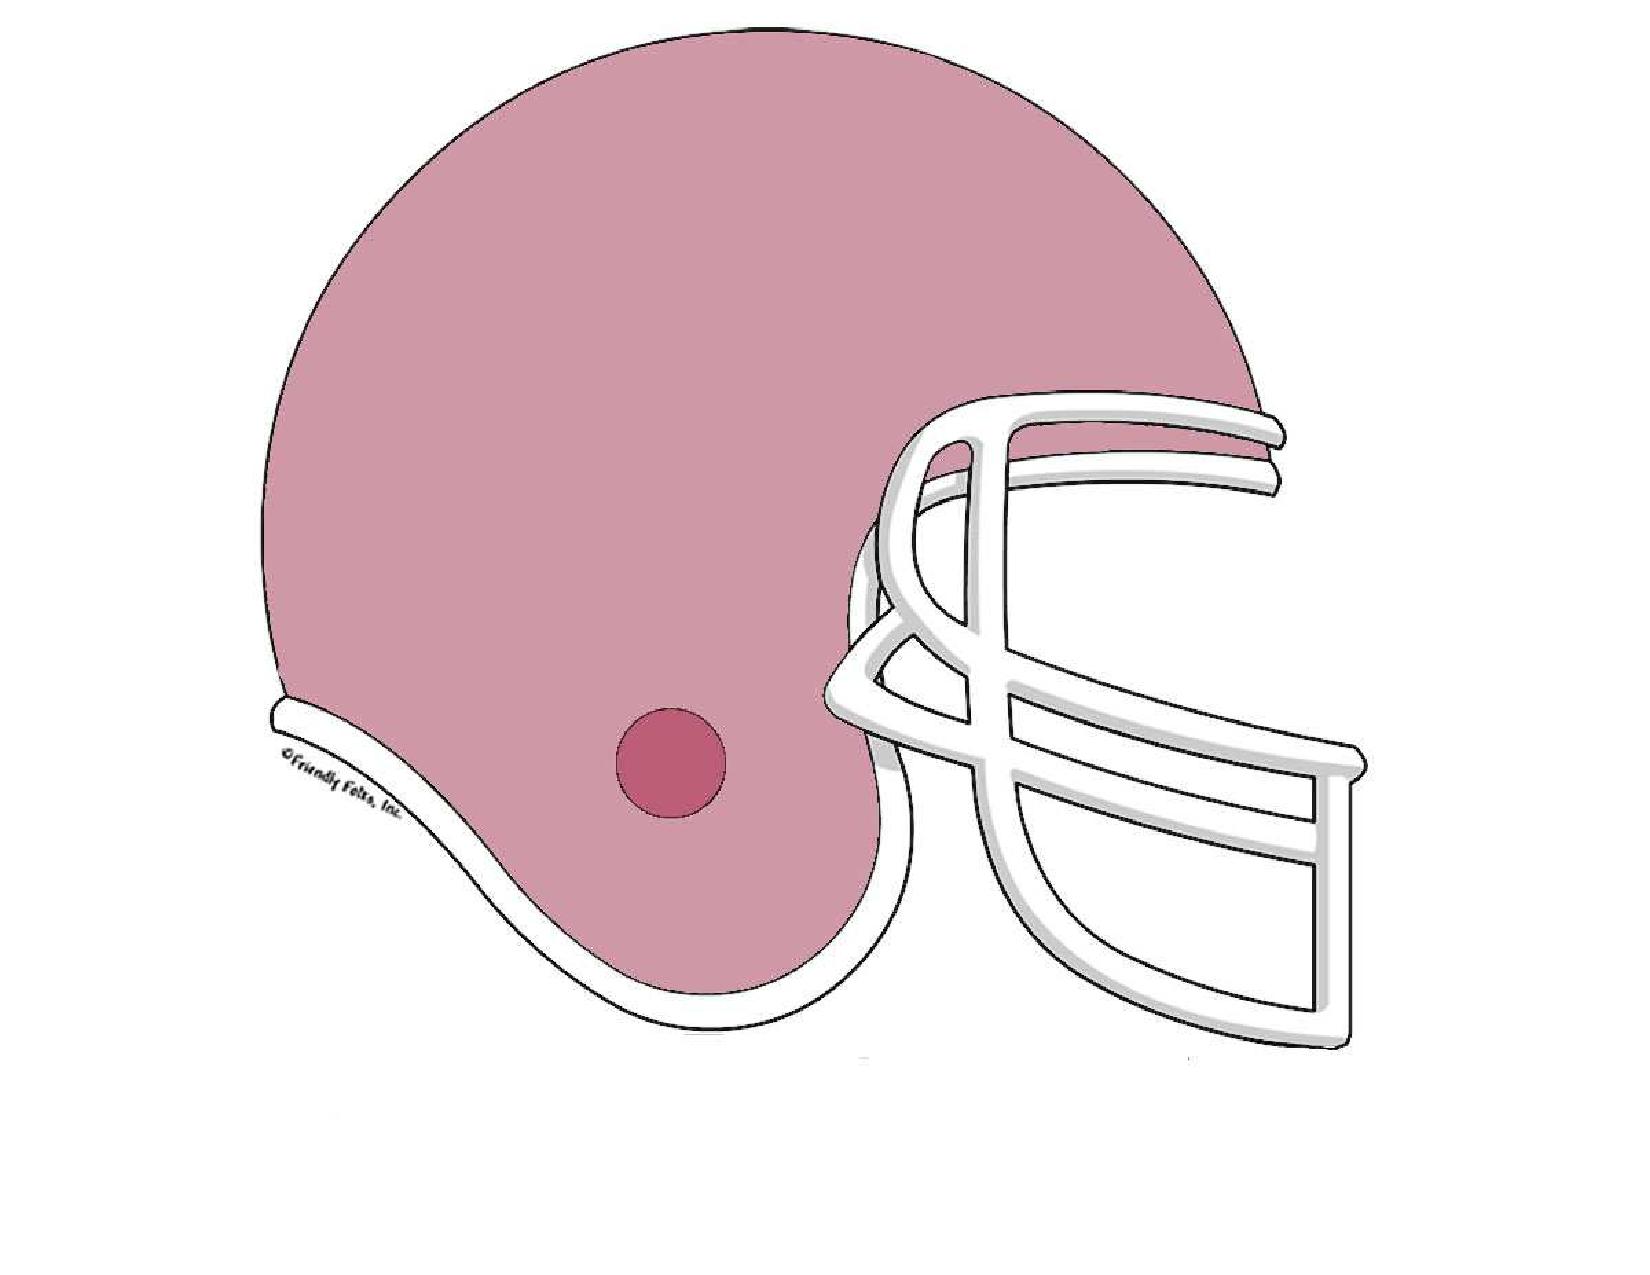 Clip Arts Related To : football helmet transparent. view all Cartoon Footba...